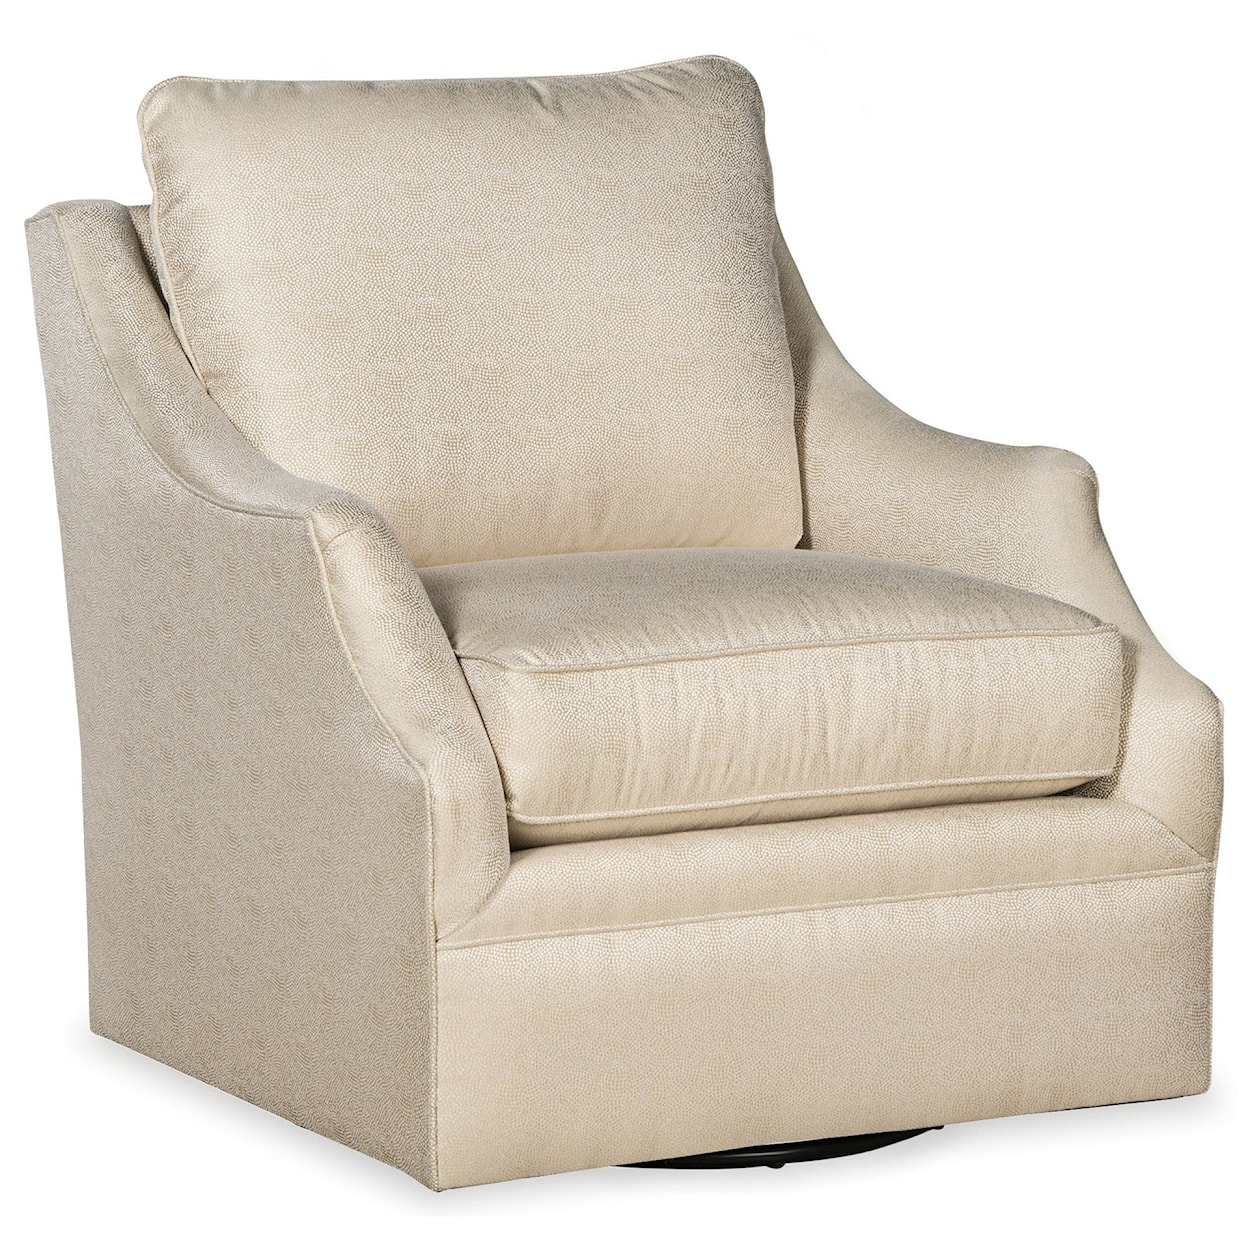 Craftmaster 097010 Swivel Chair